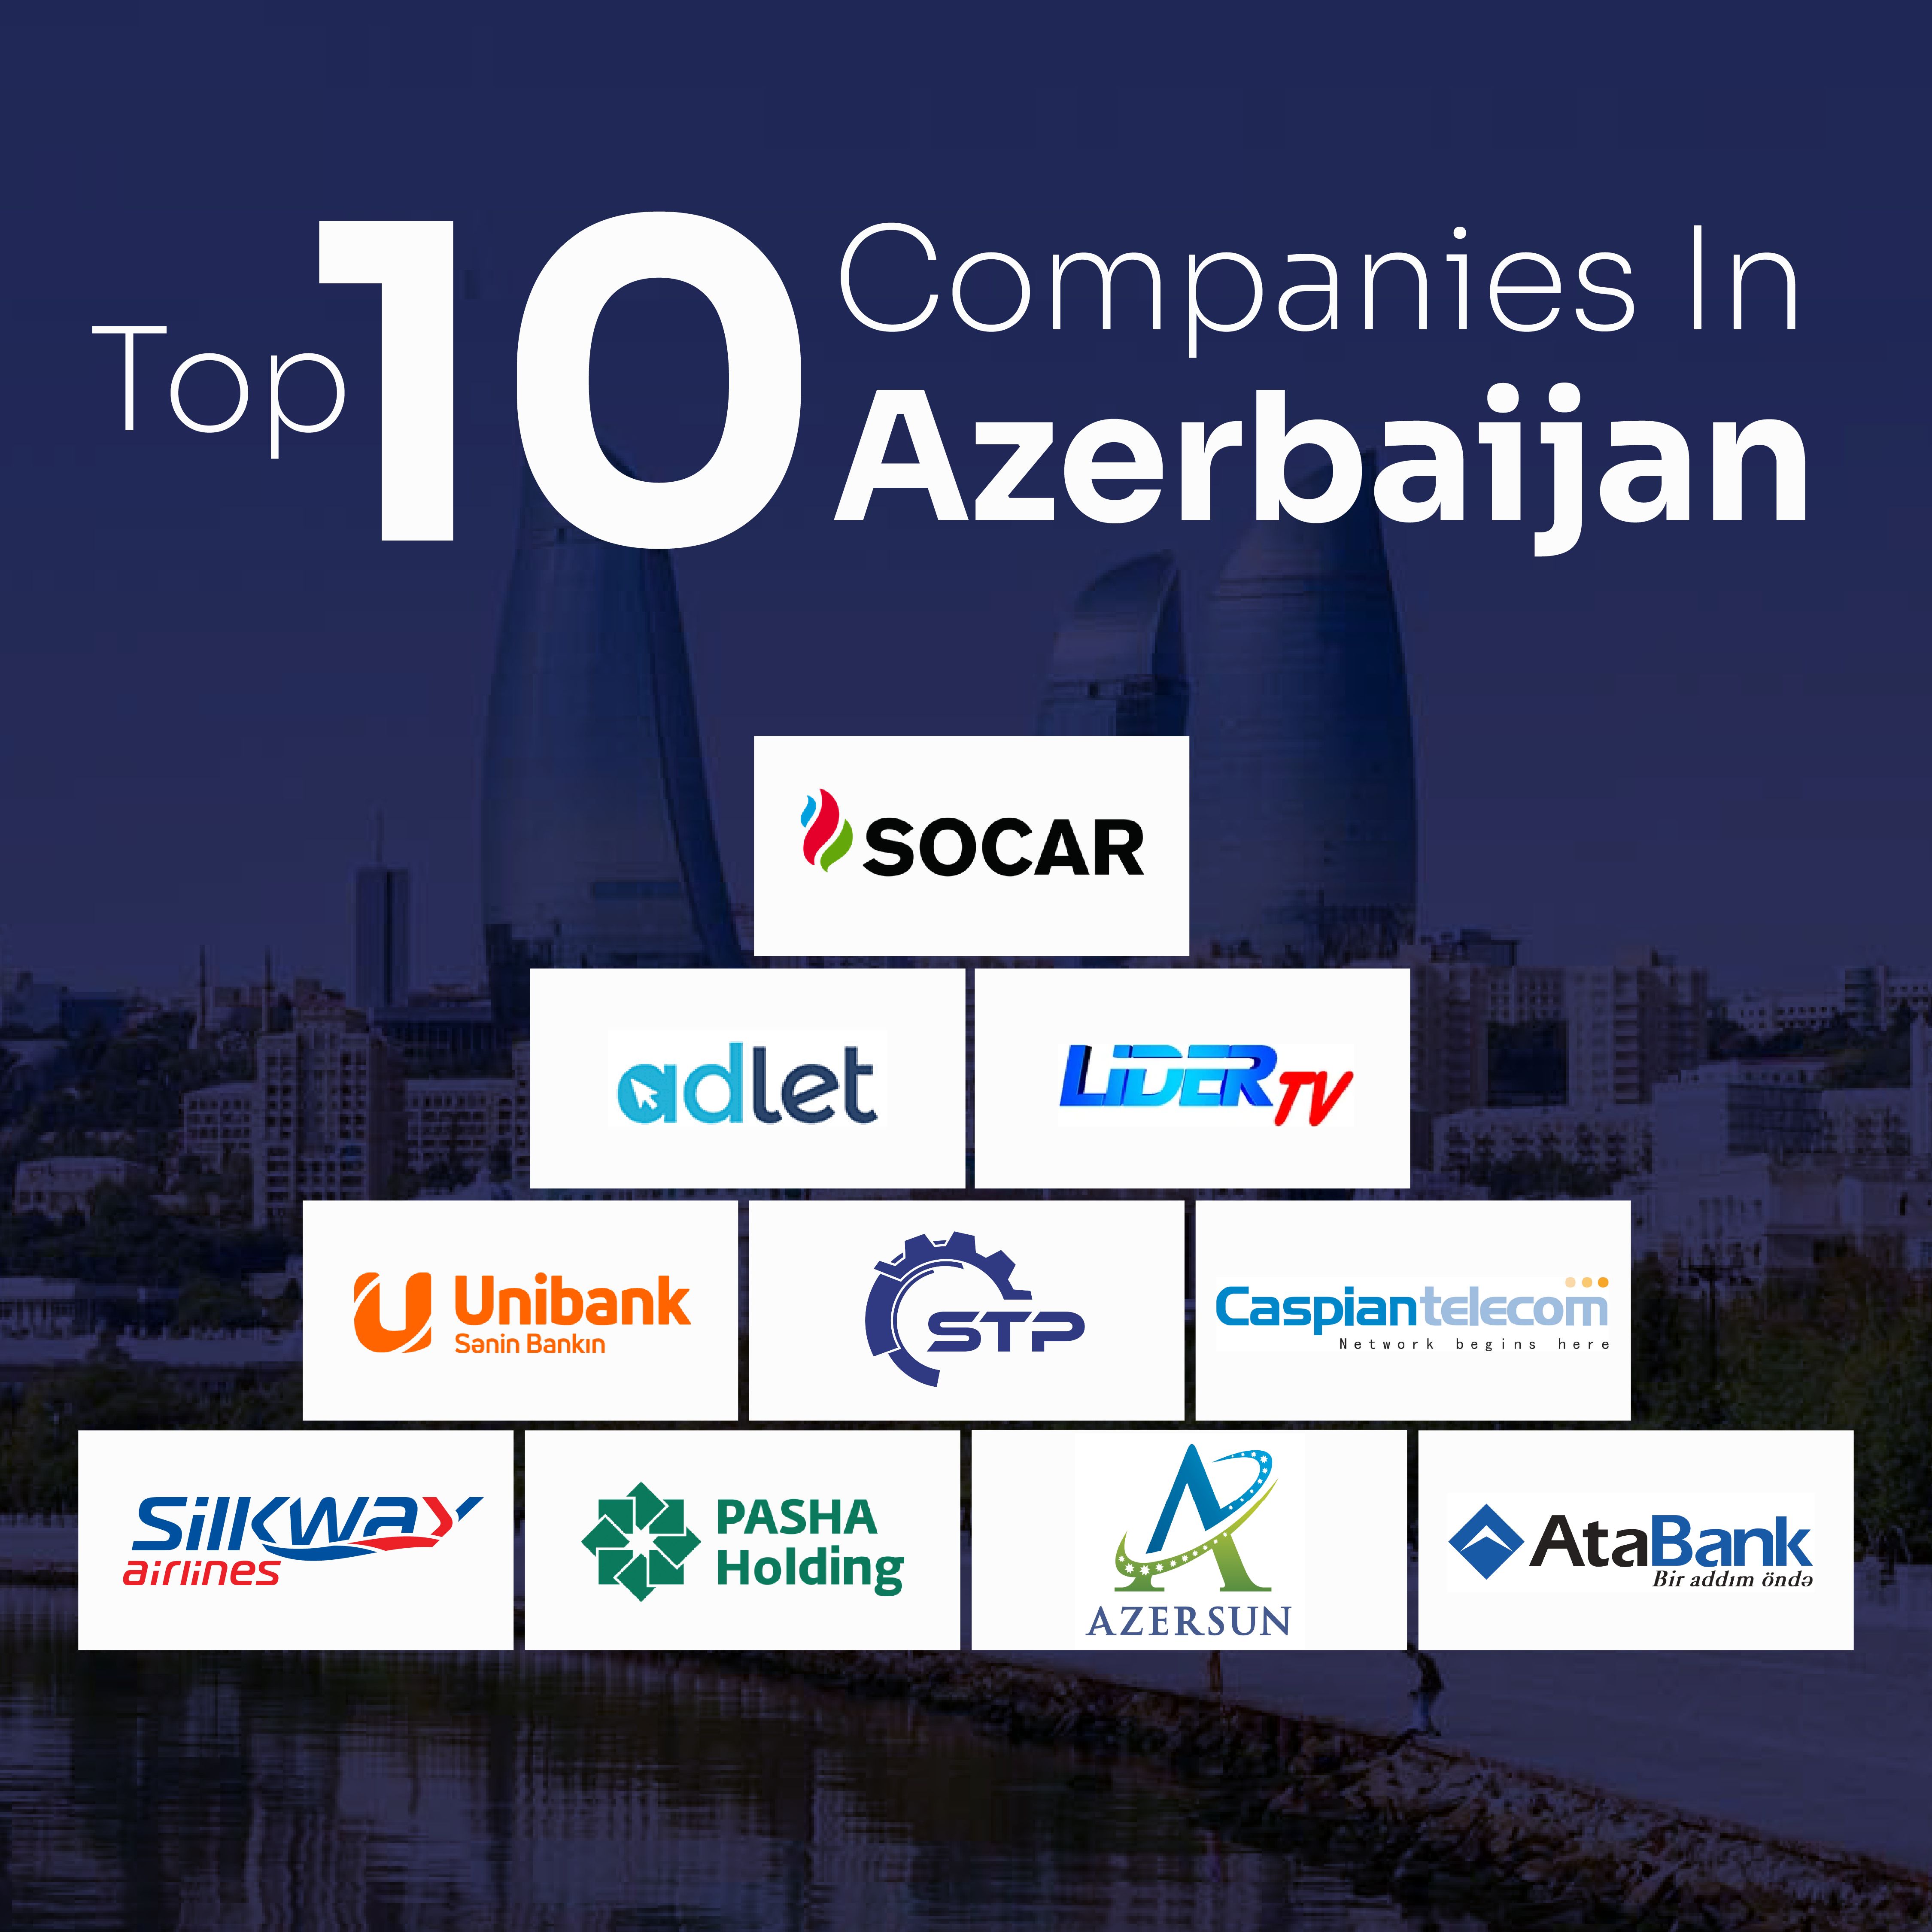 Top 10 Companies In Azerbaijan.png